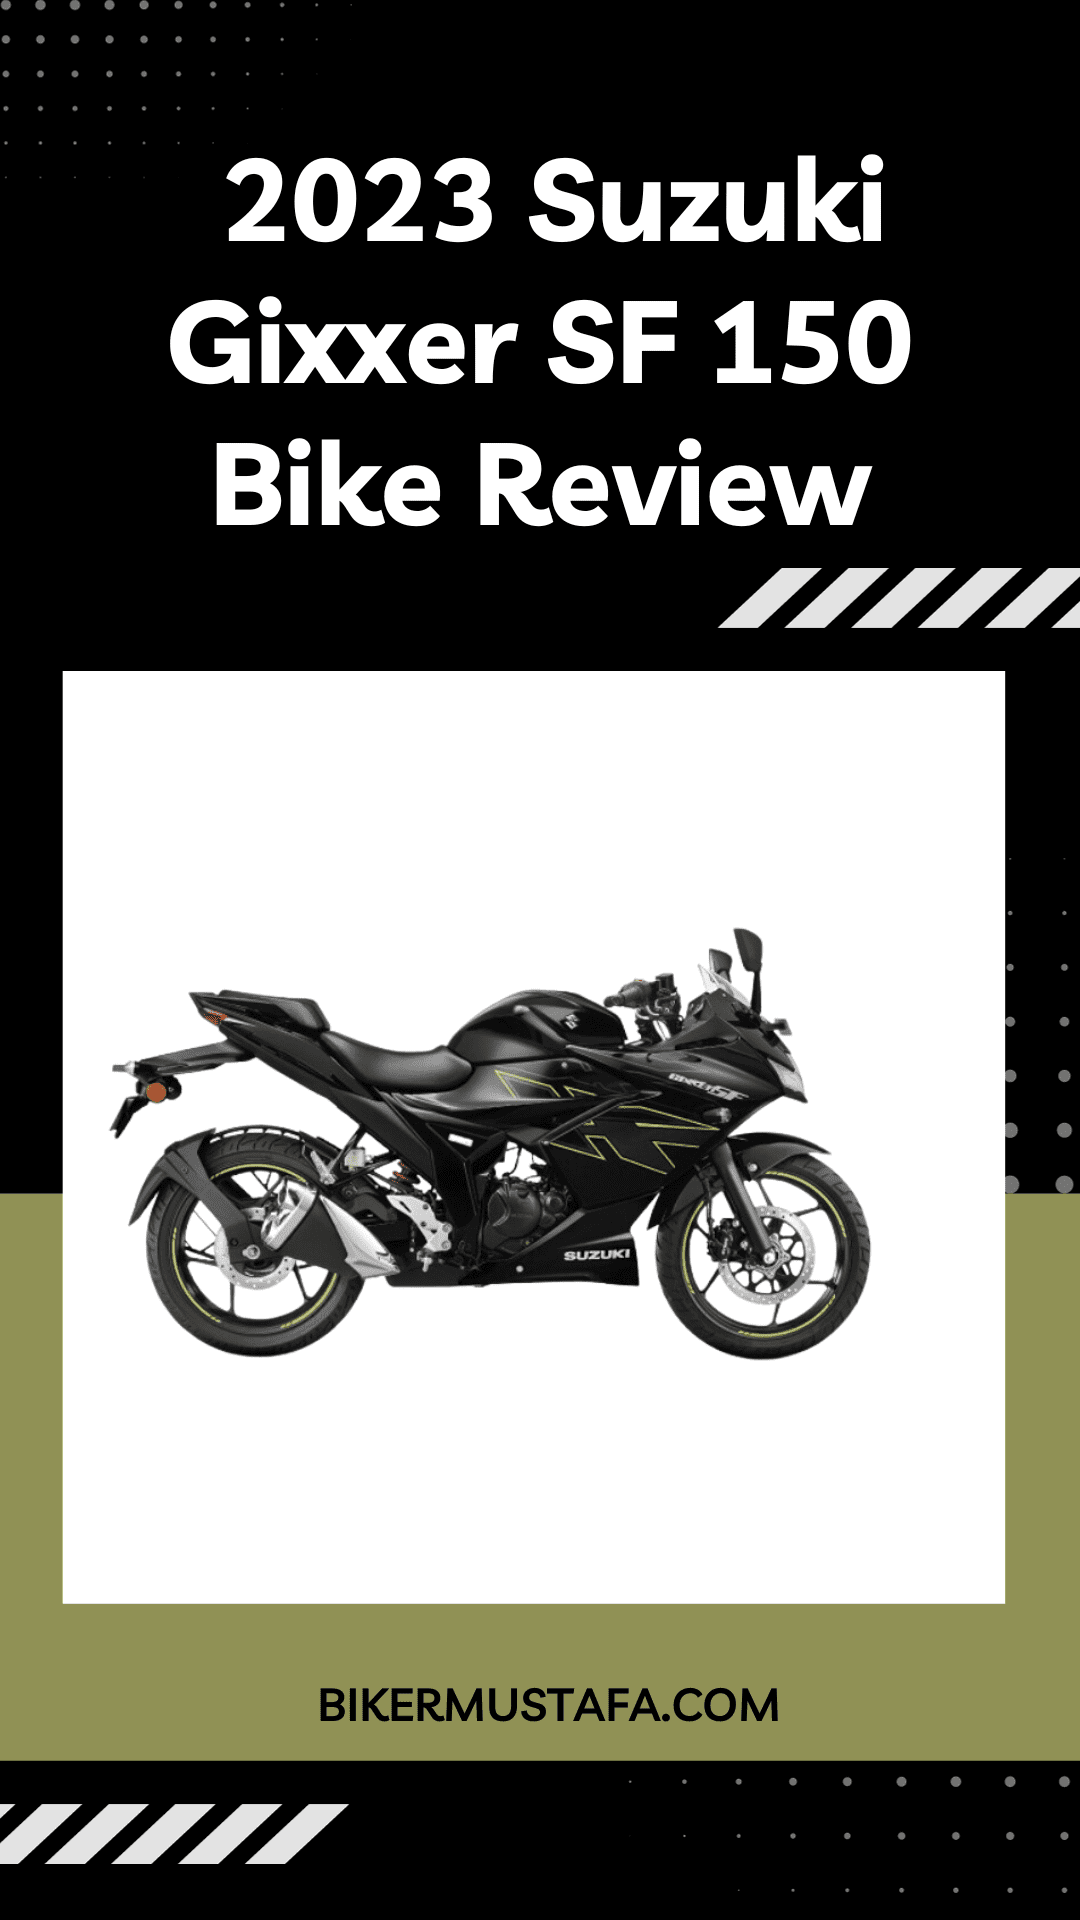  2023 Suzuki Gixxer SF 150 Bike Review